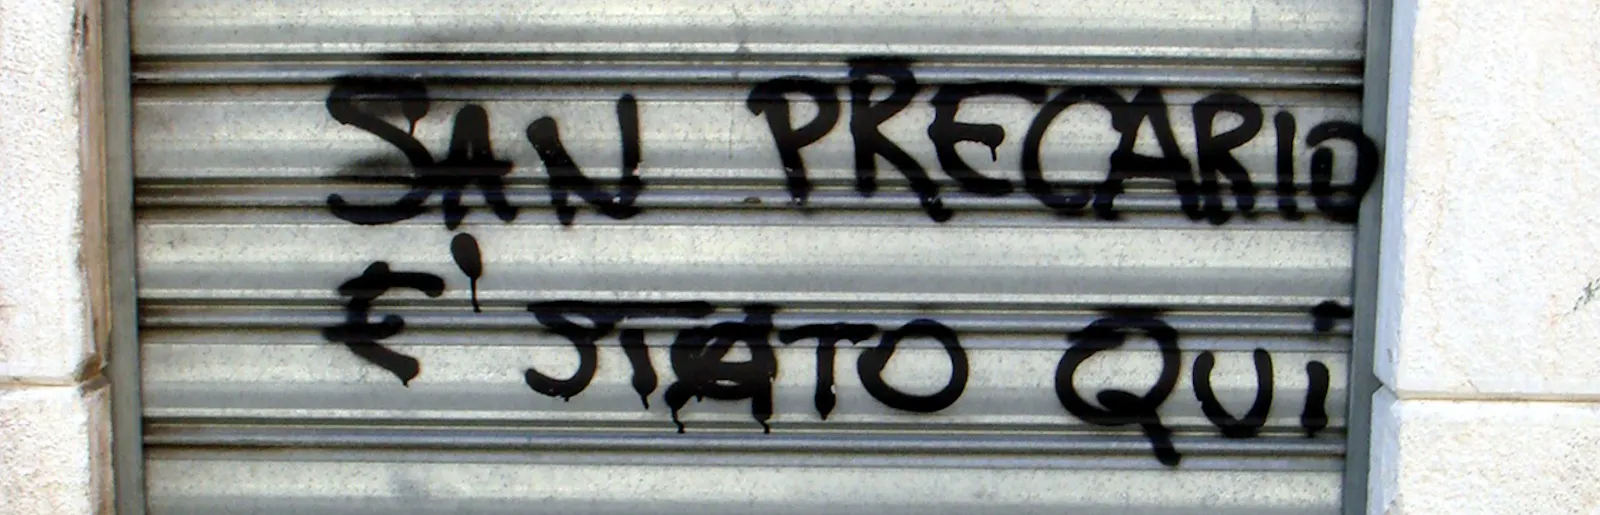 Graffiti auf Italienisch, "San Precario é stato qui"